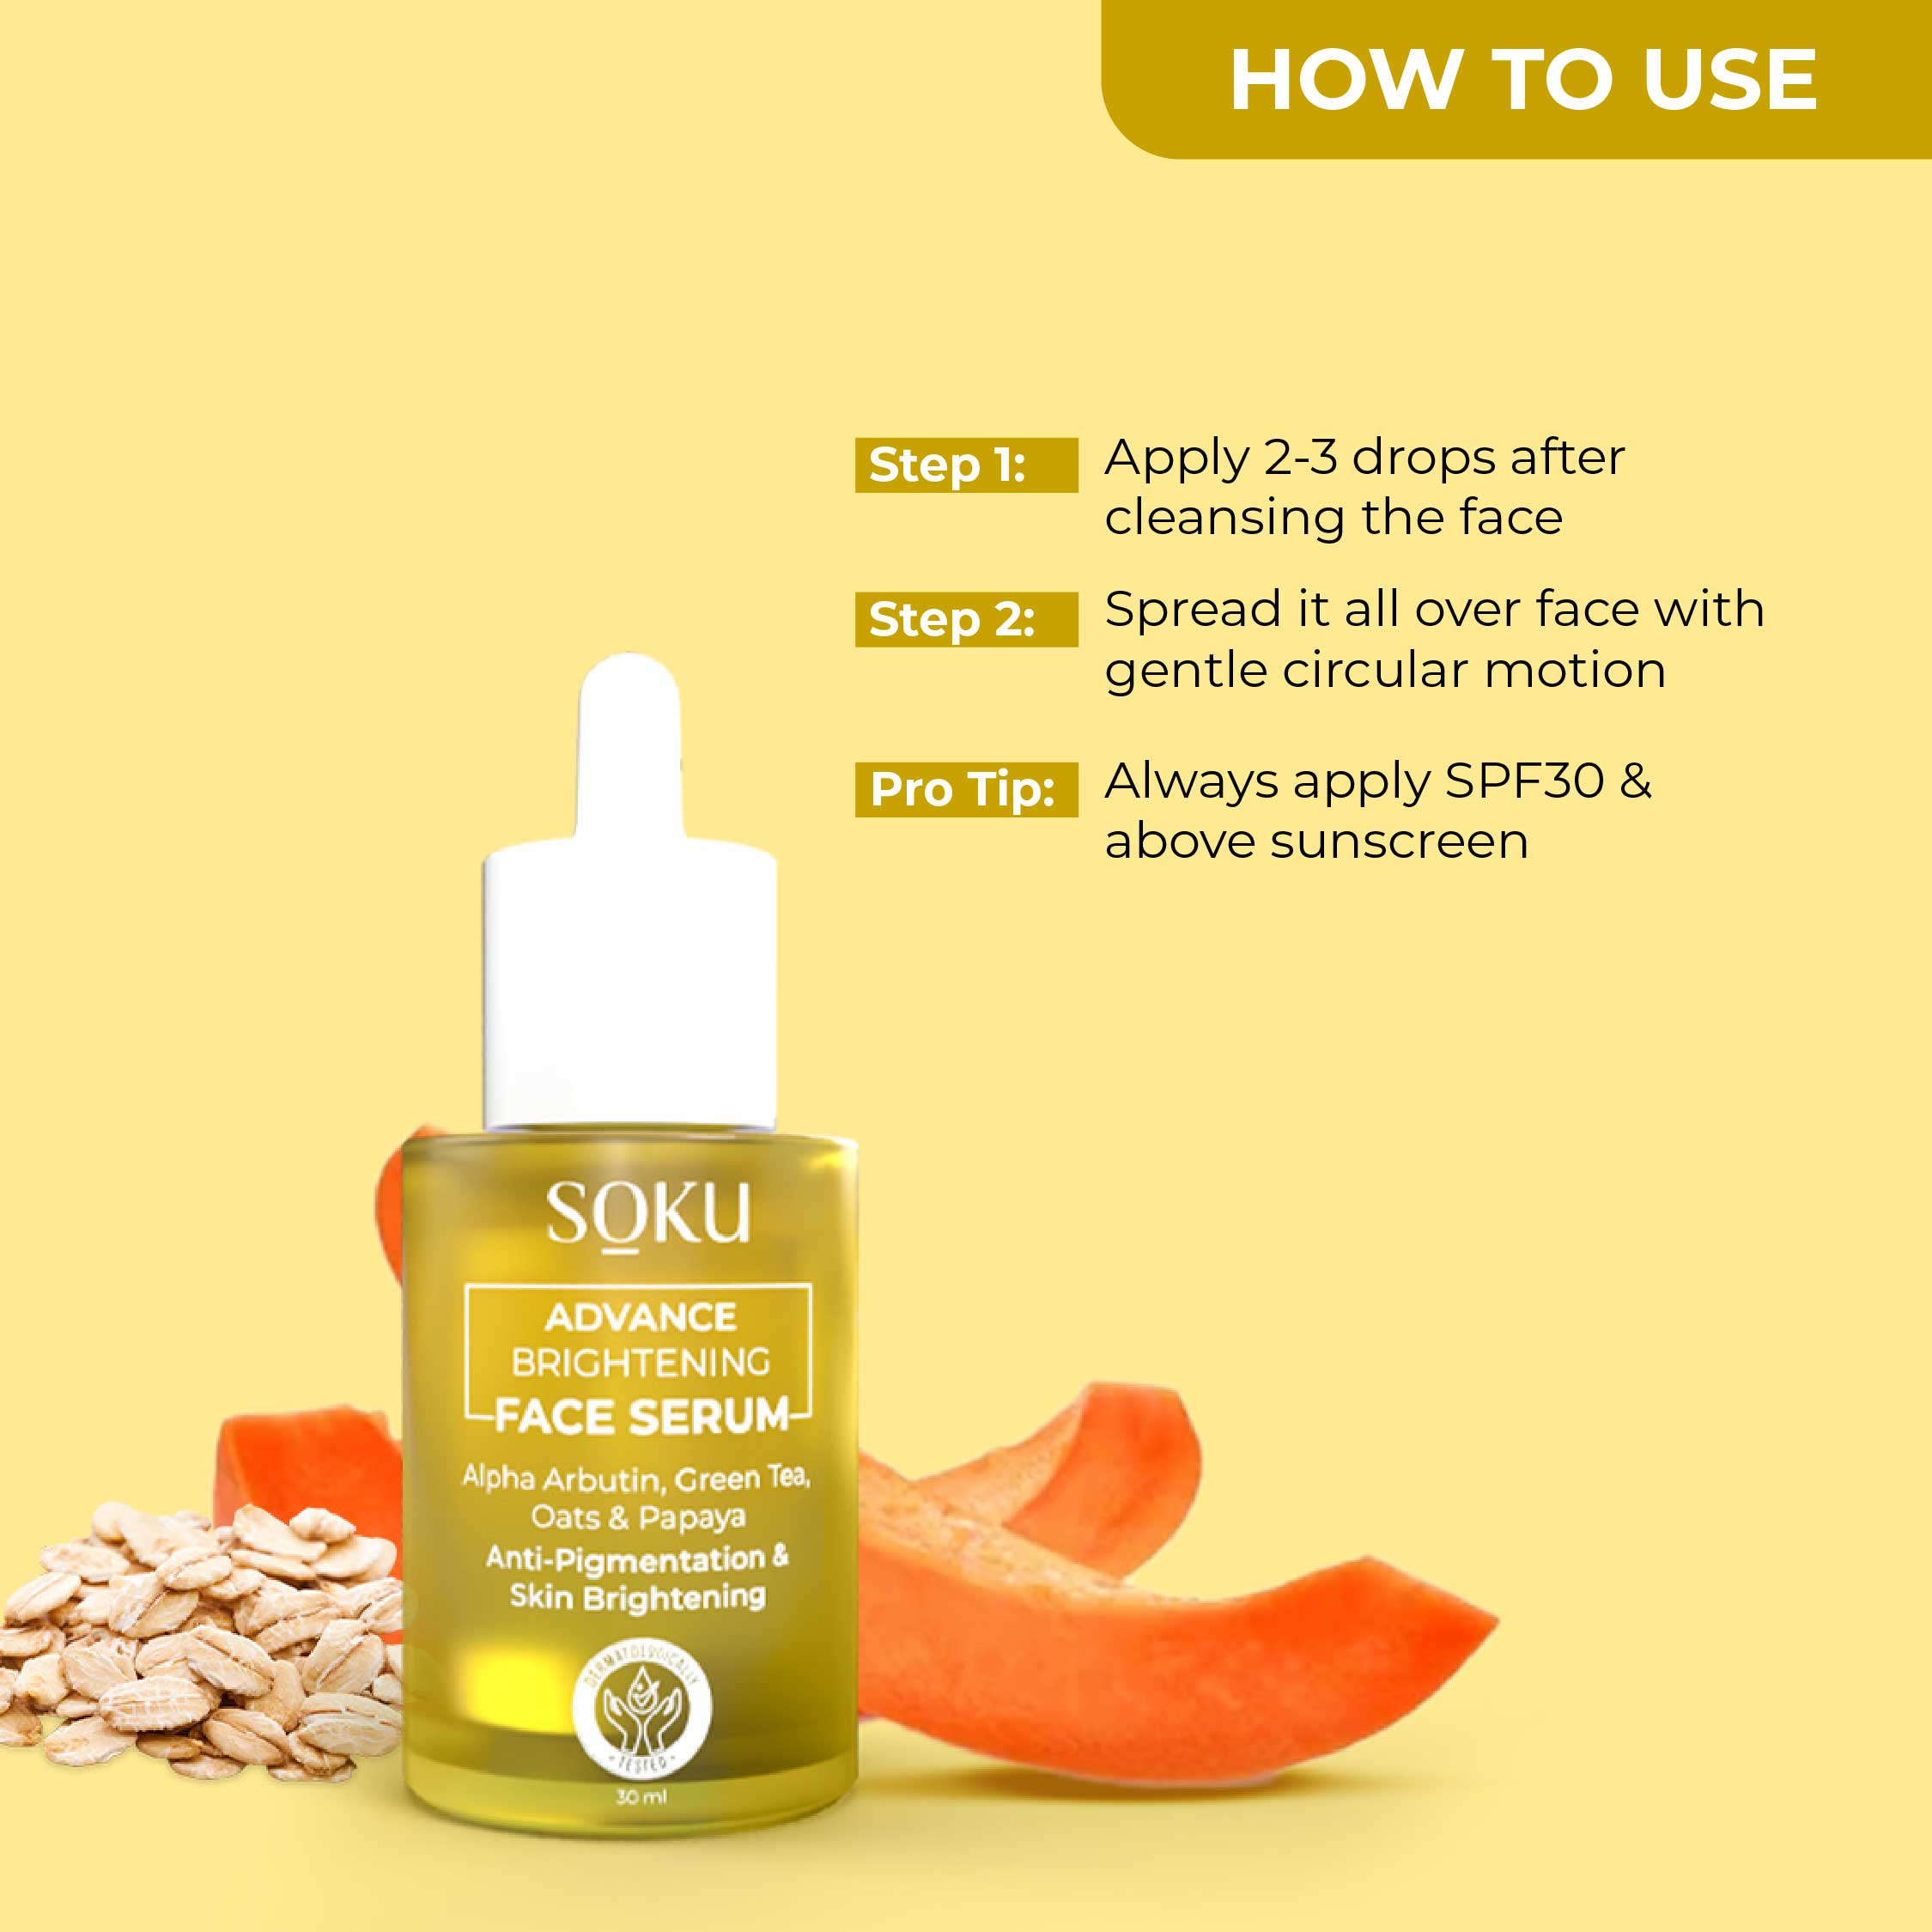 SOKU Advance Brightening Face Serum - 30 ml